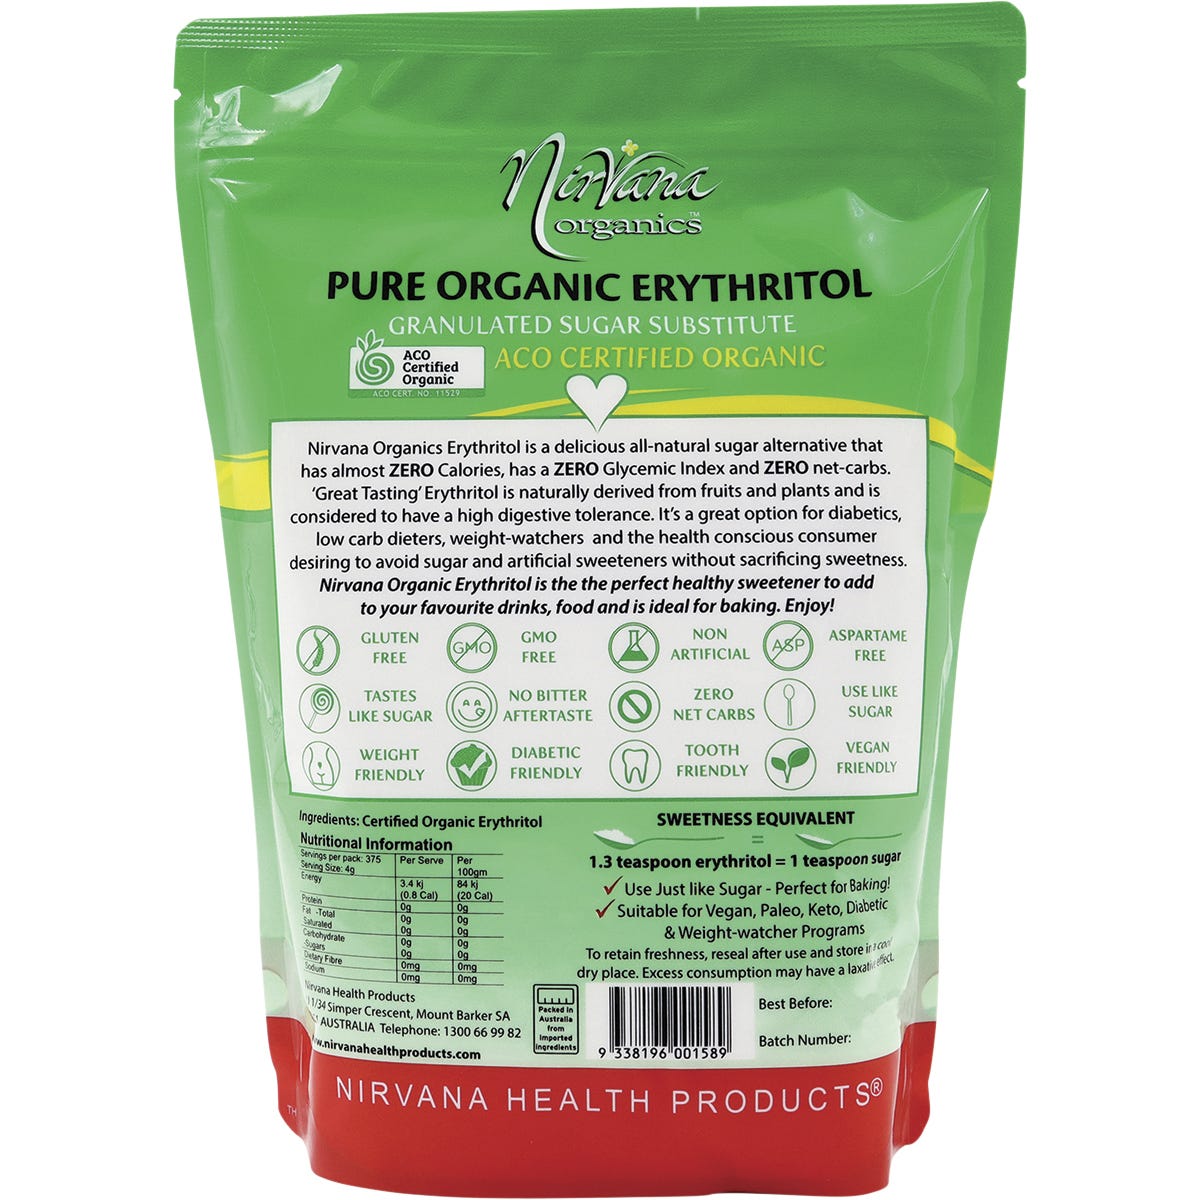 Nirvana Organics Erythritol Pure Organic